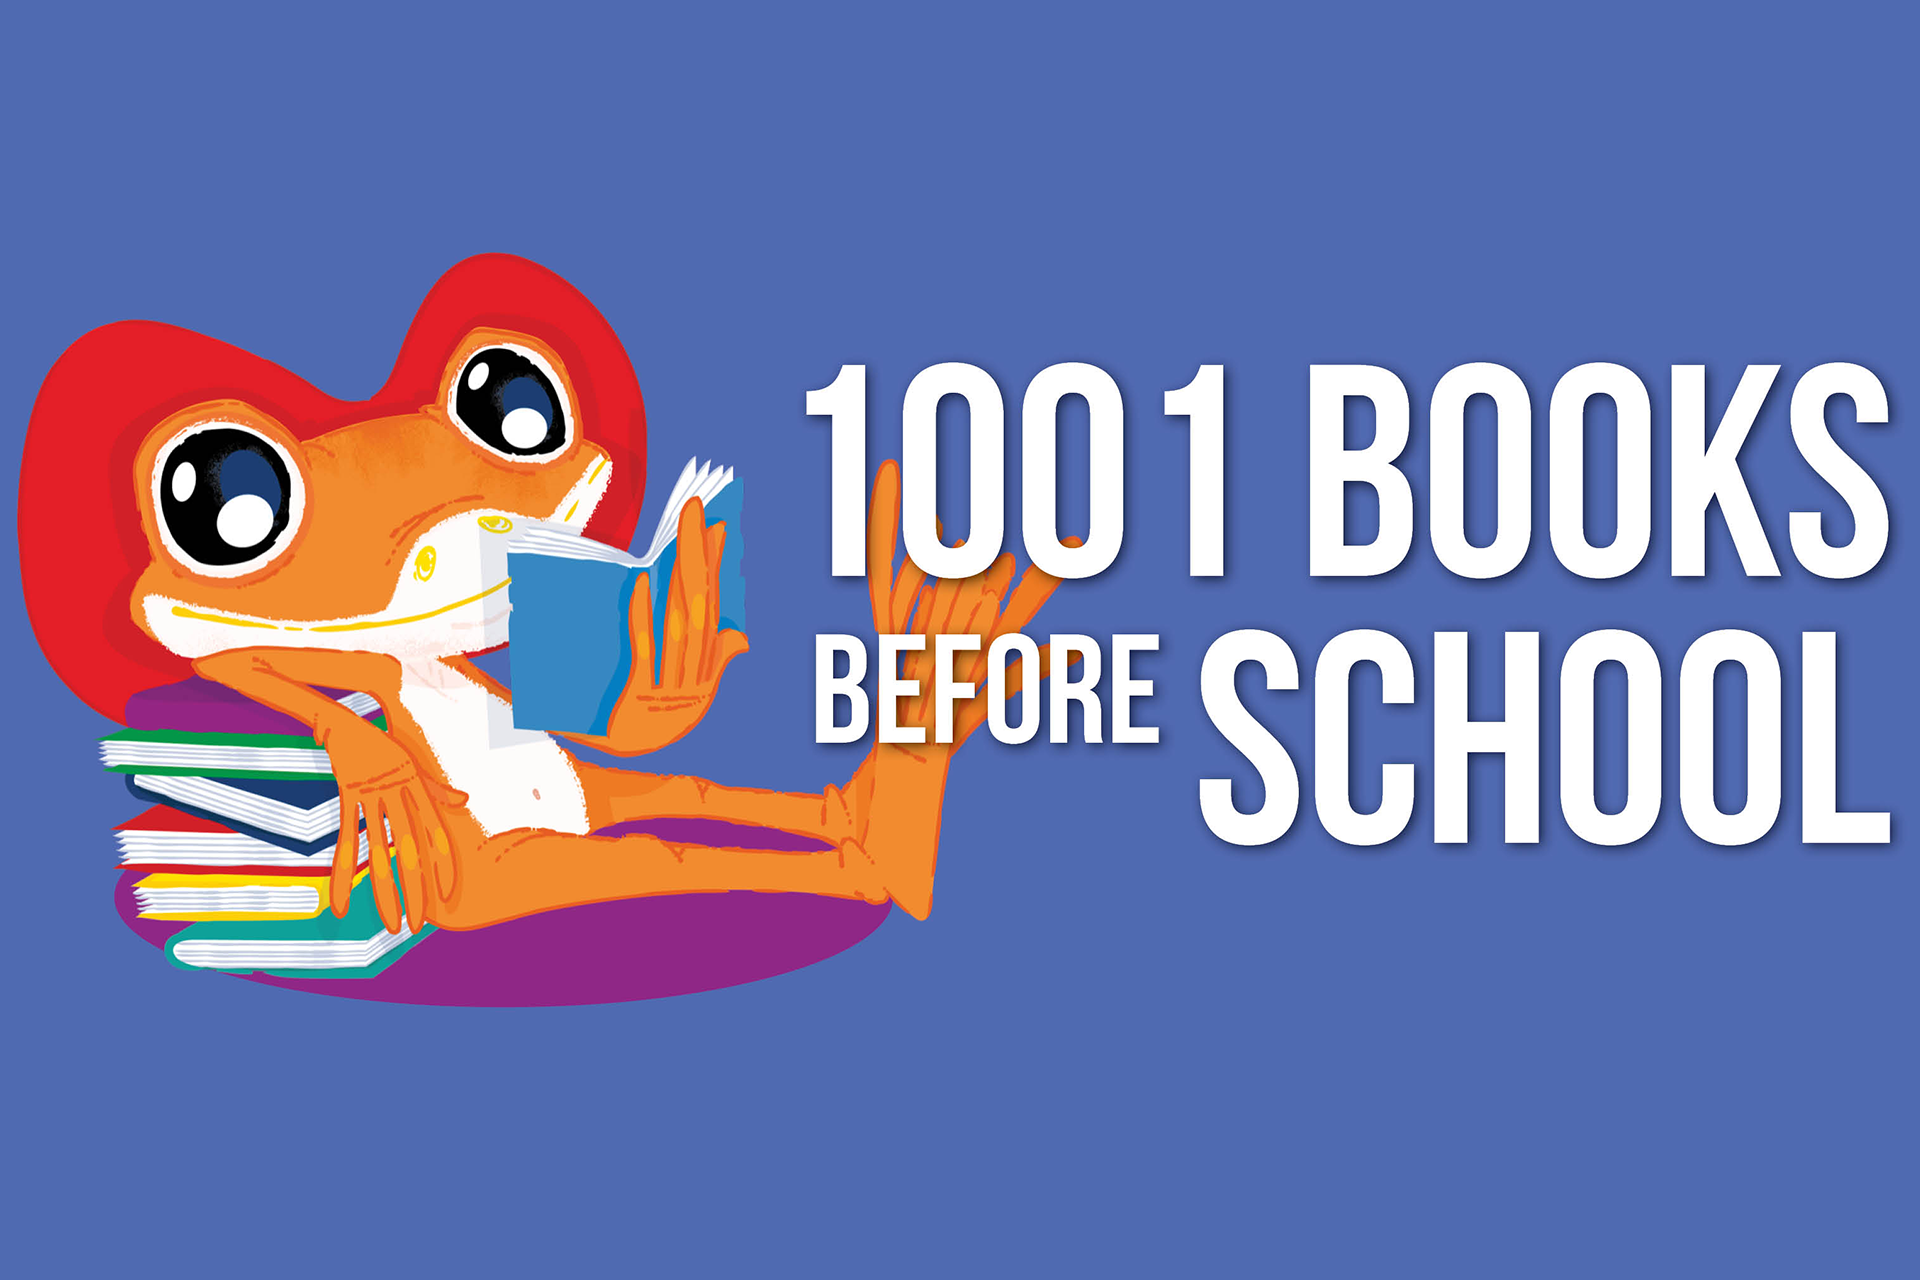 1001 Books Before School